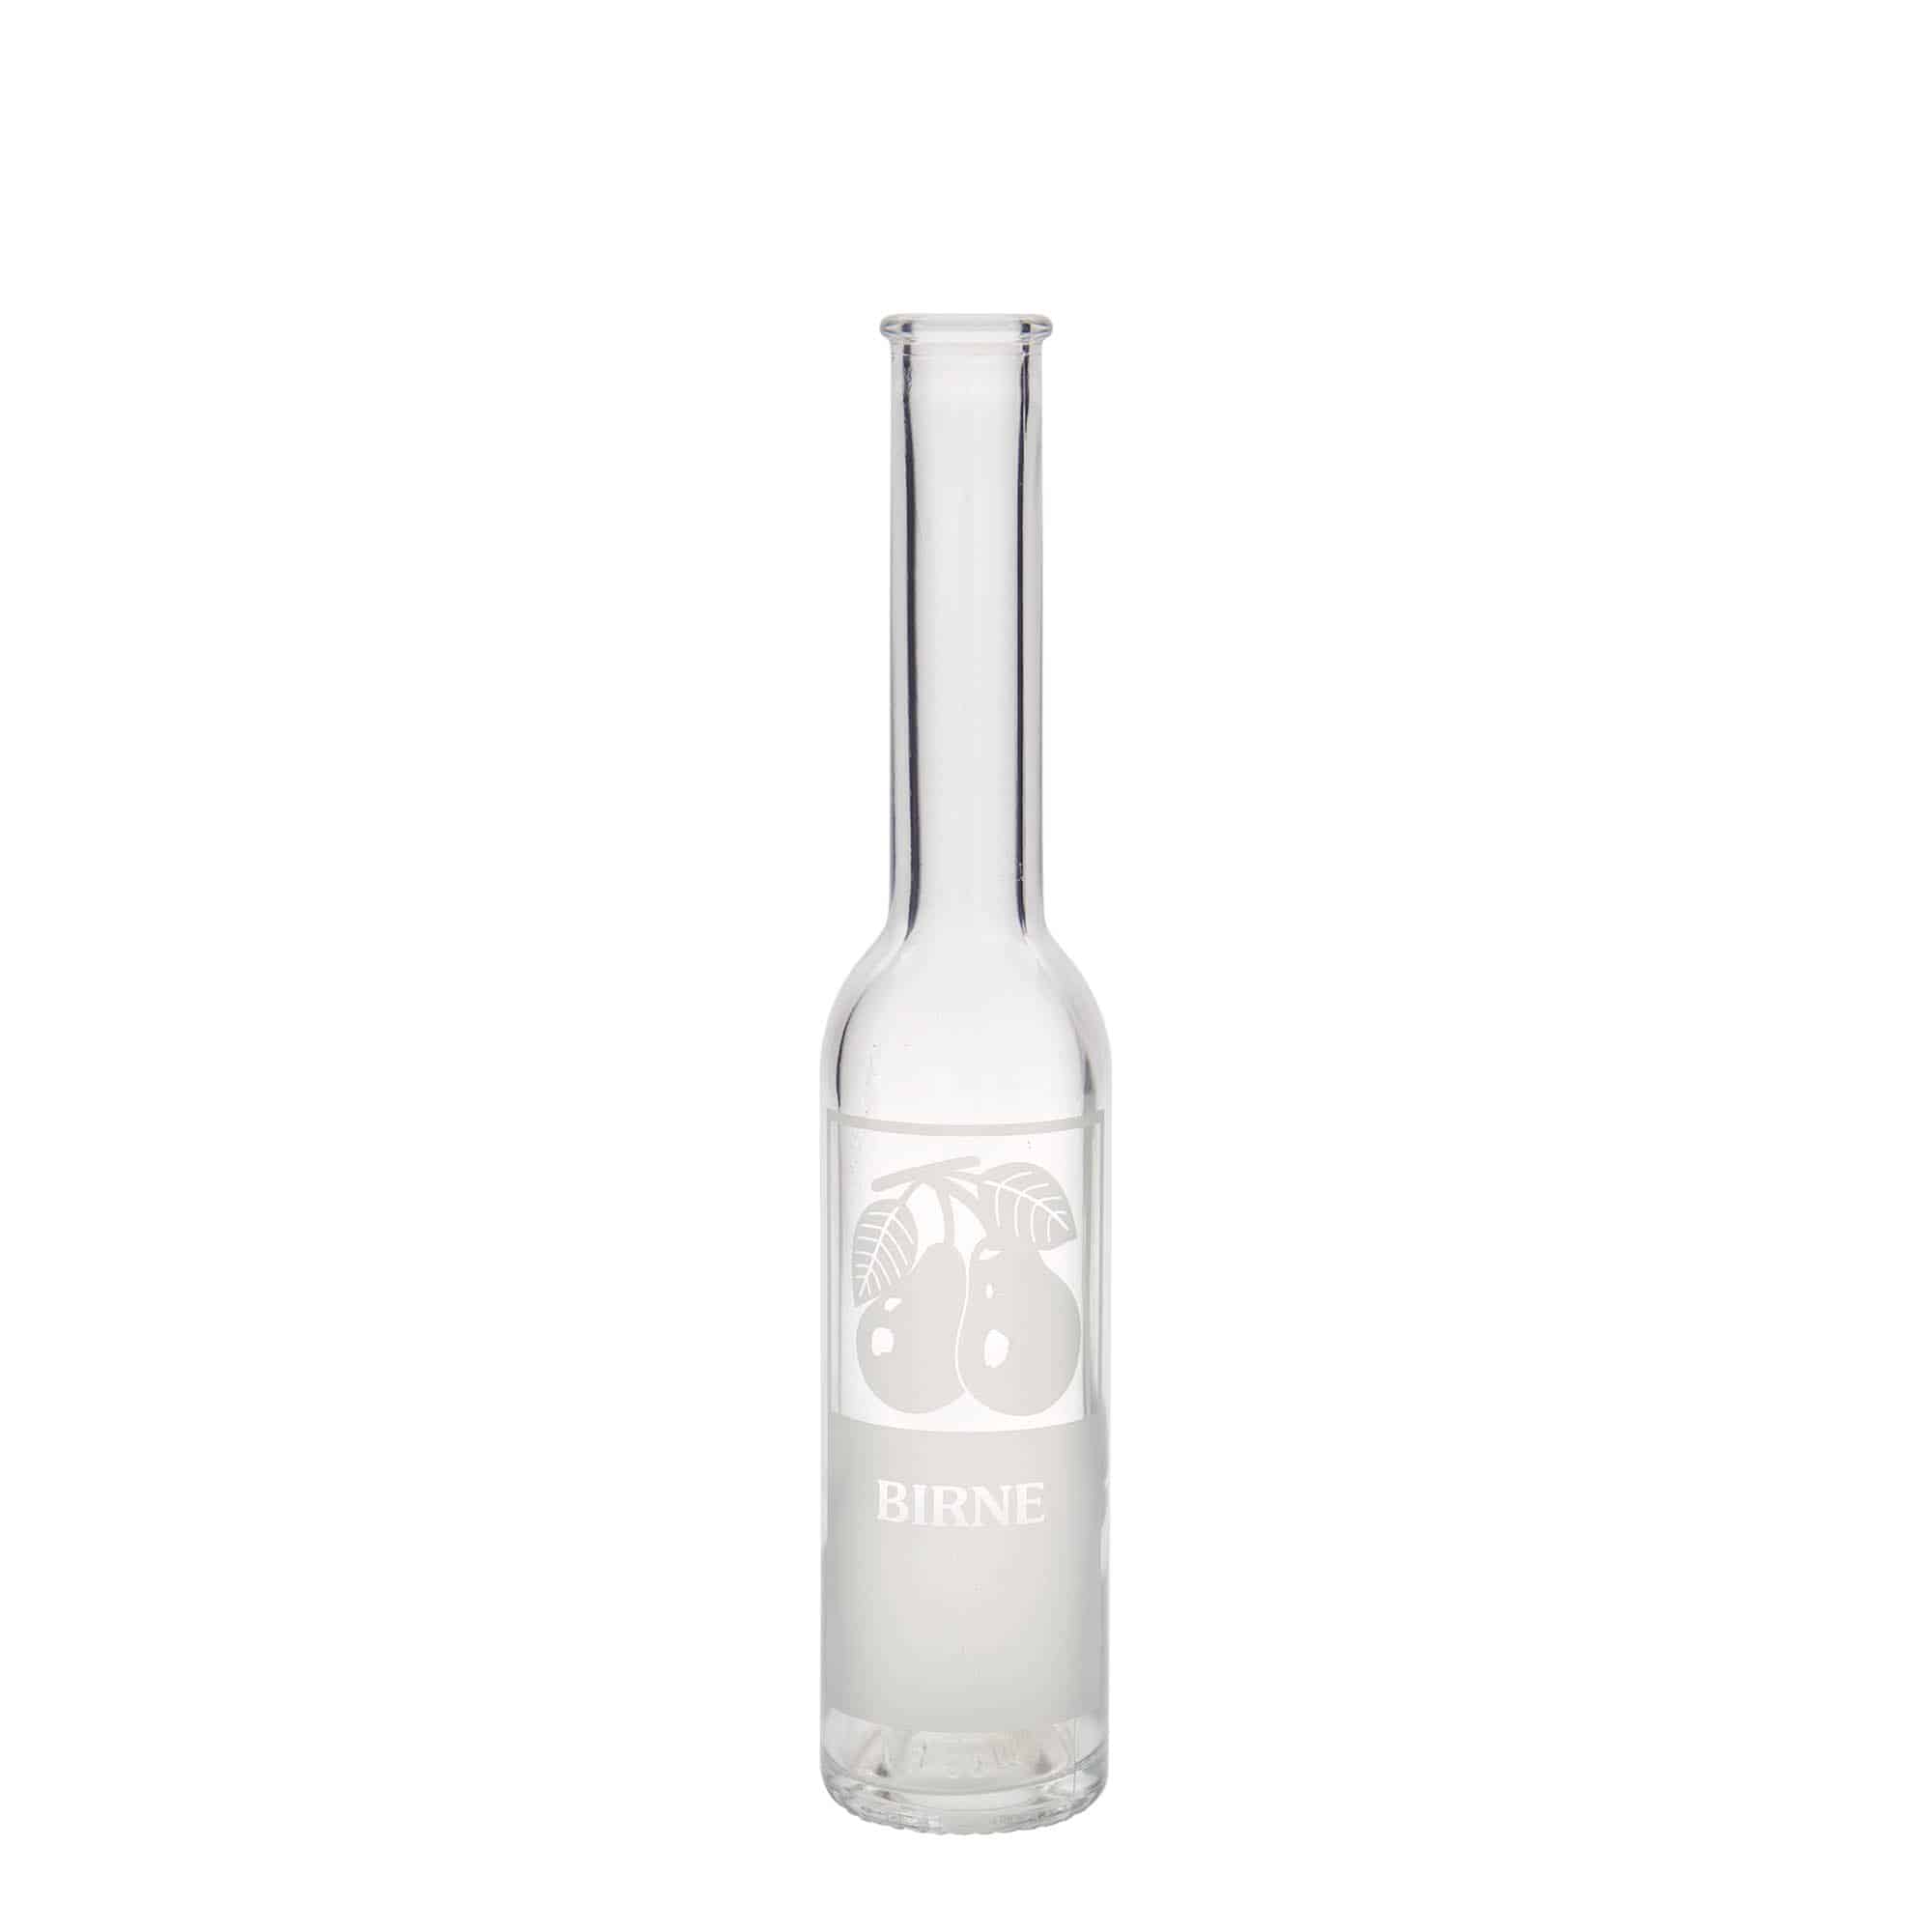 200 ml glass bottle 'Opera', print: pear, closure: cork